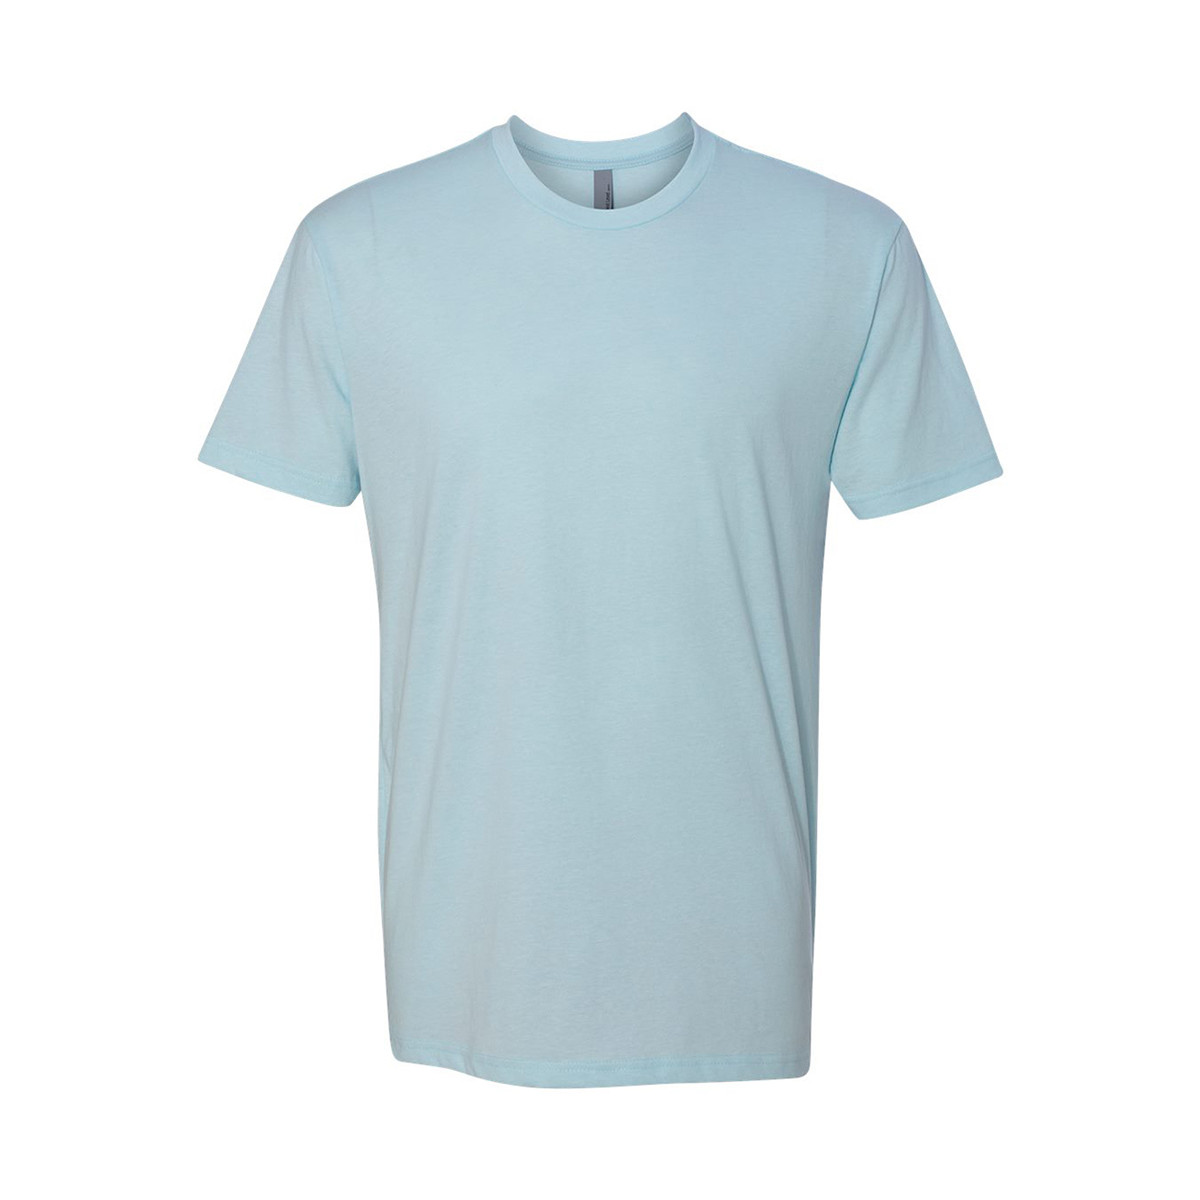 textil Camisetas manga larga Next Level CVC Azul